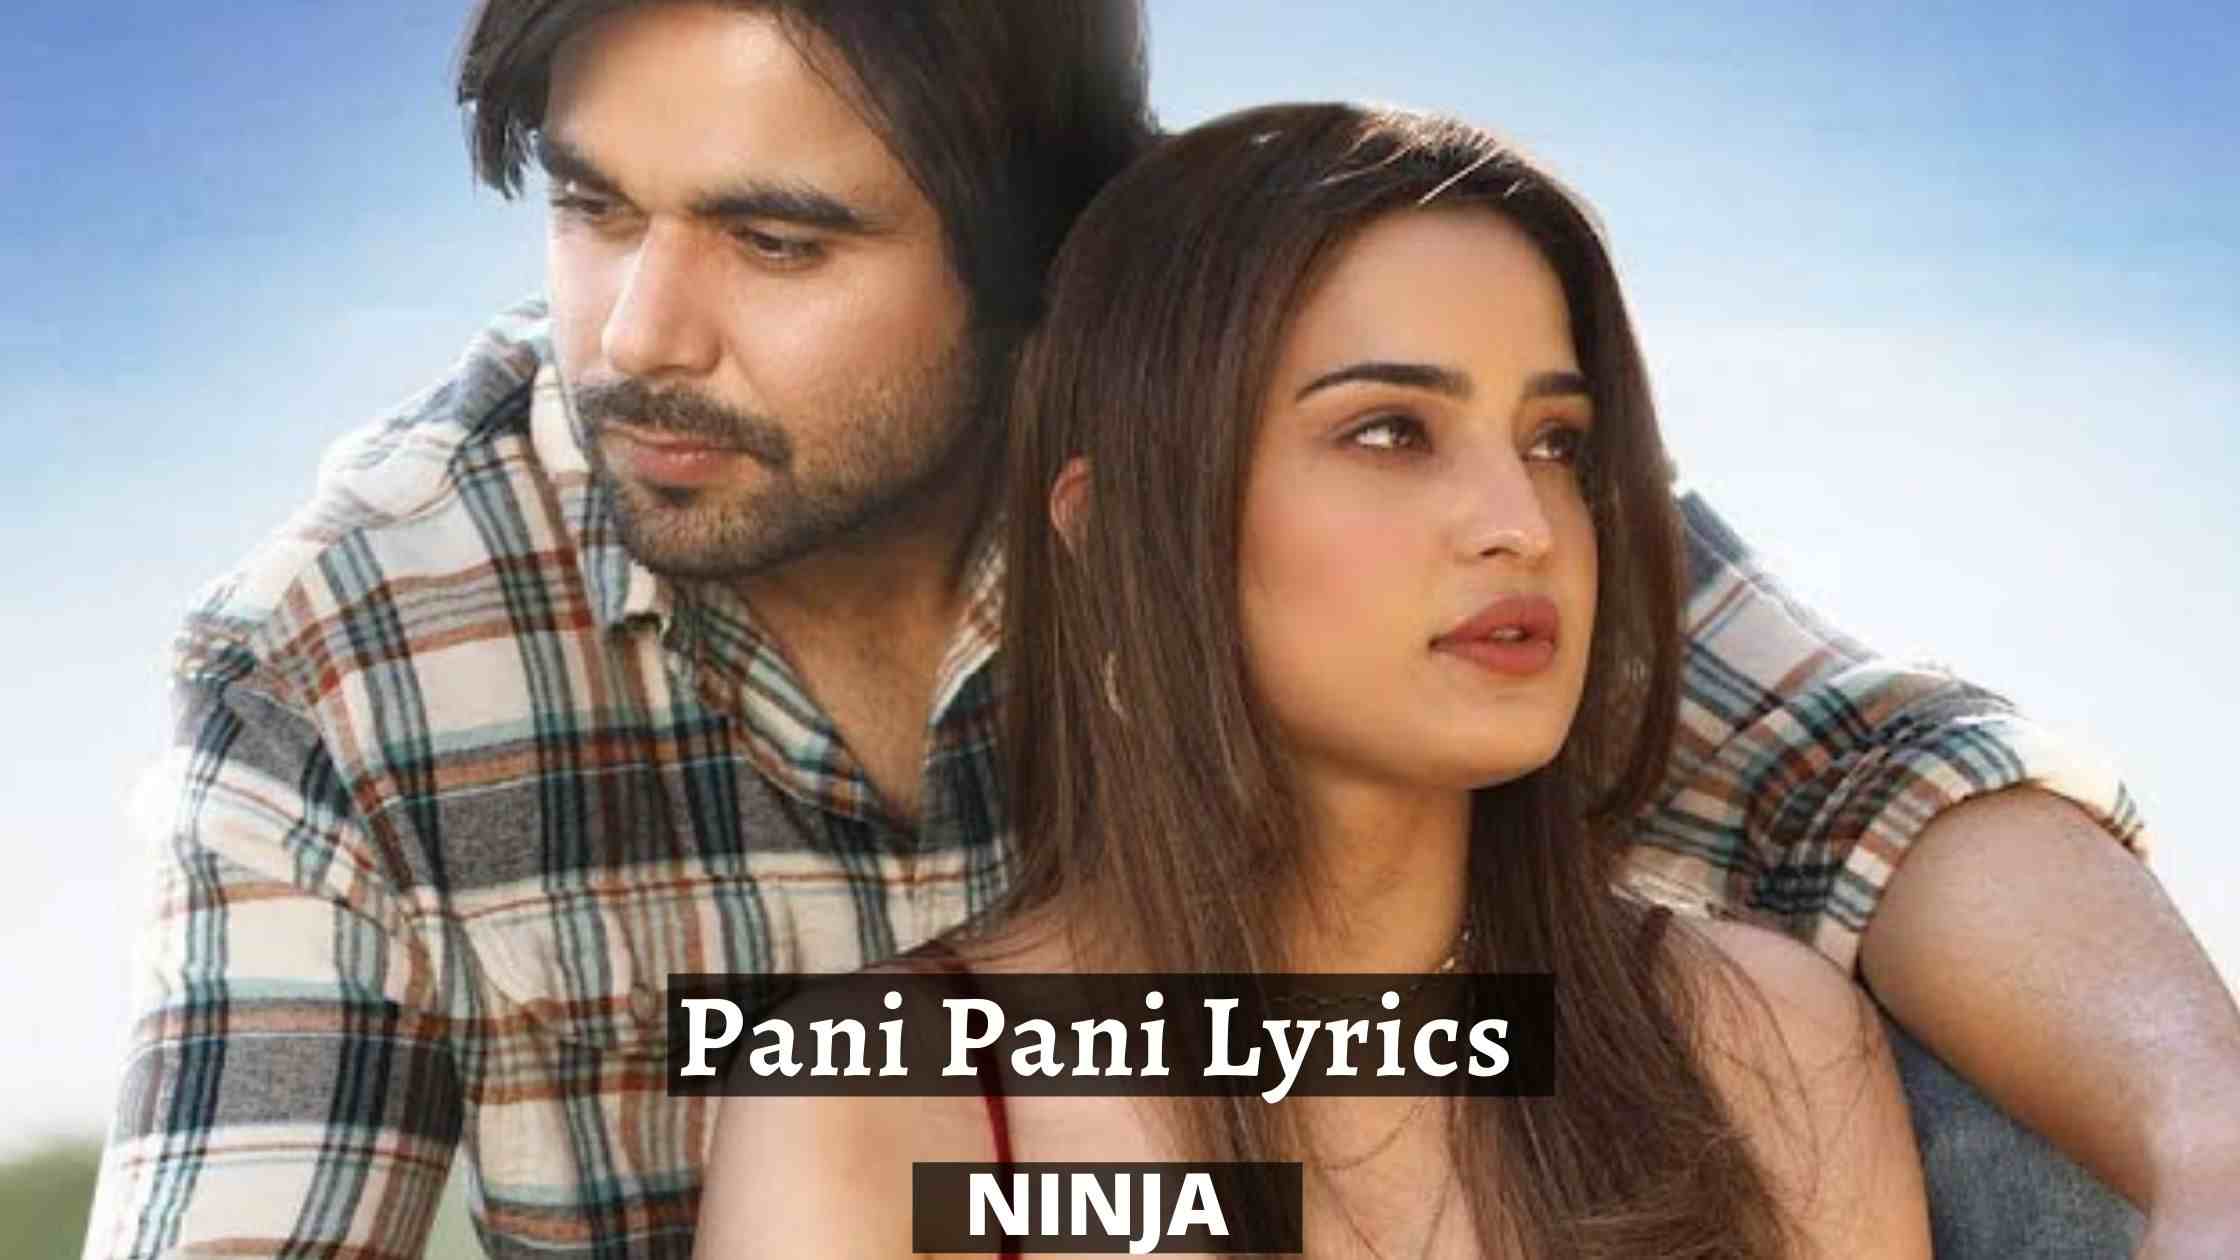 NINJA Pani Pani Lyrics (Hindi, English) Ft